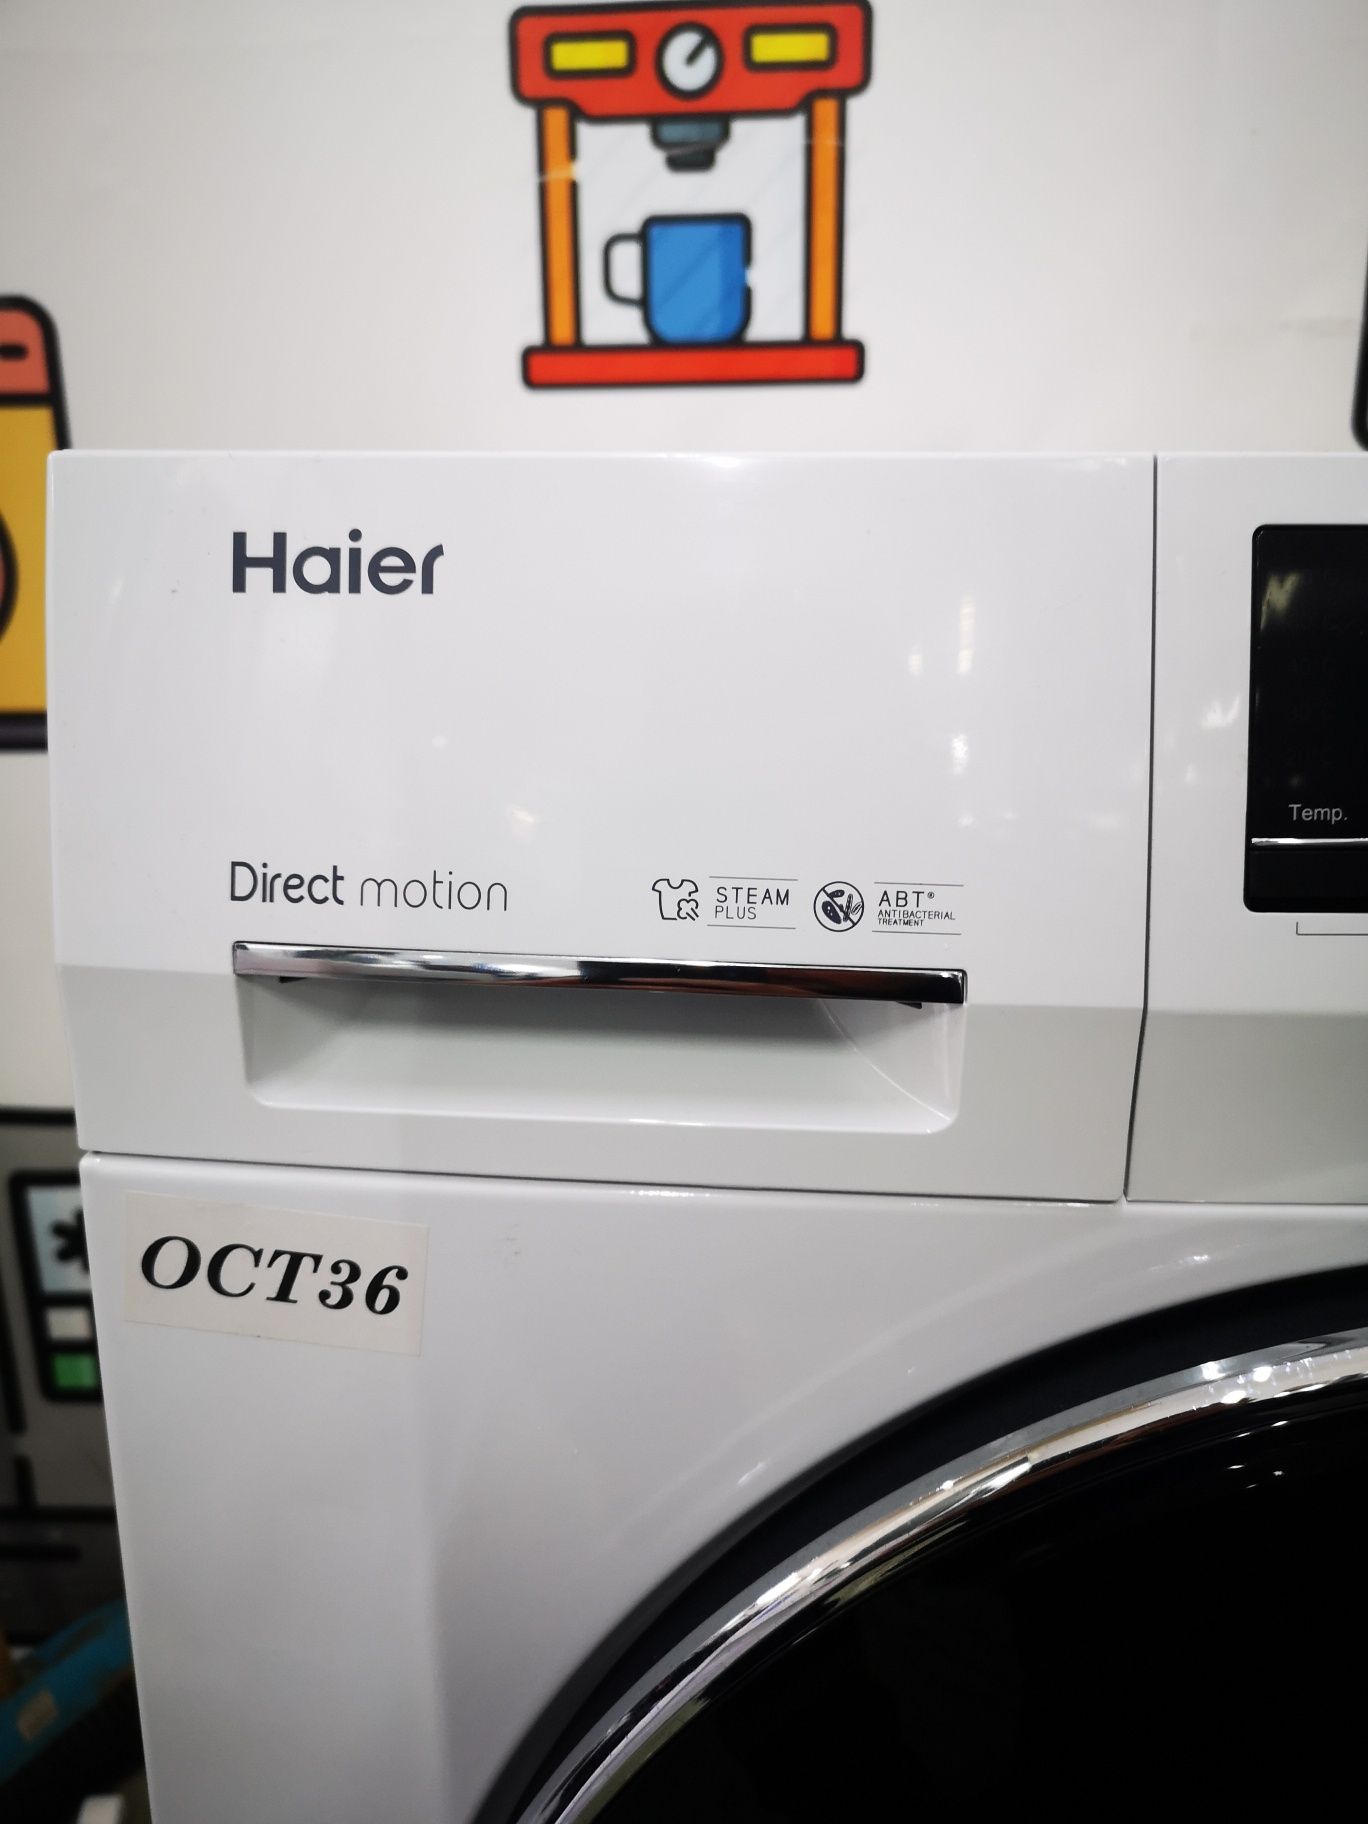 Mașina de spălat Haier 9kg import Germania cu Garanție OCT36